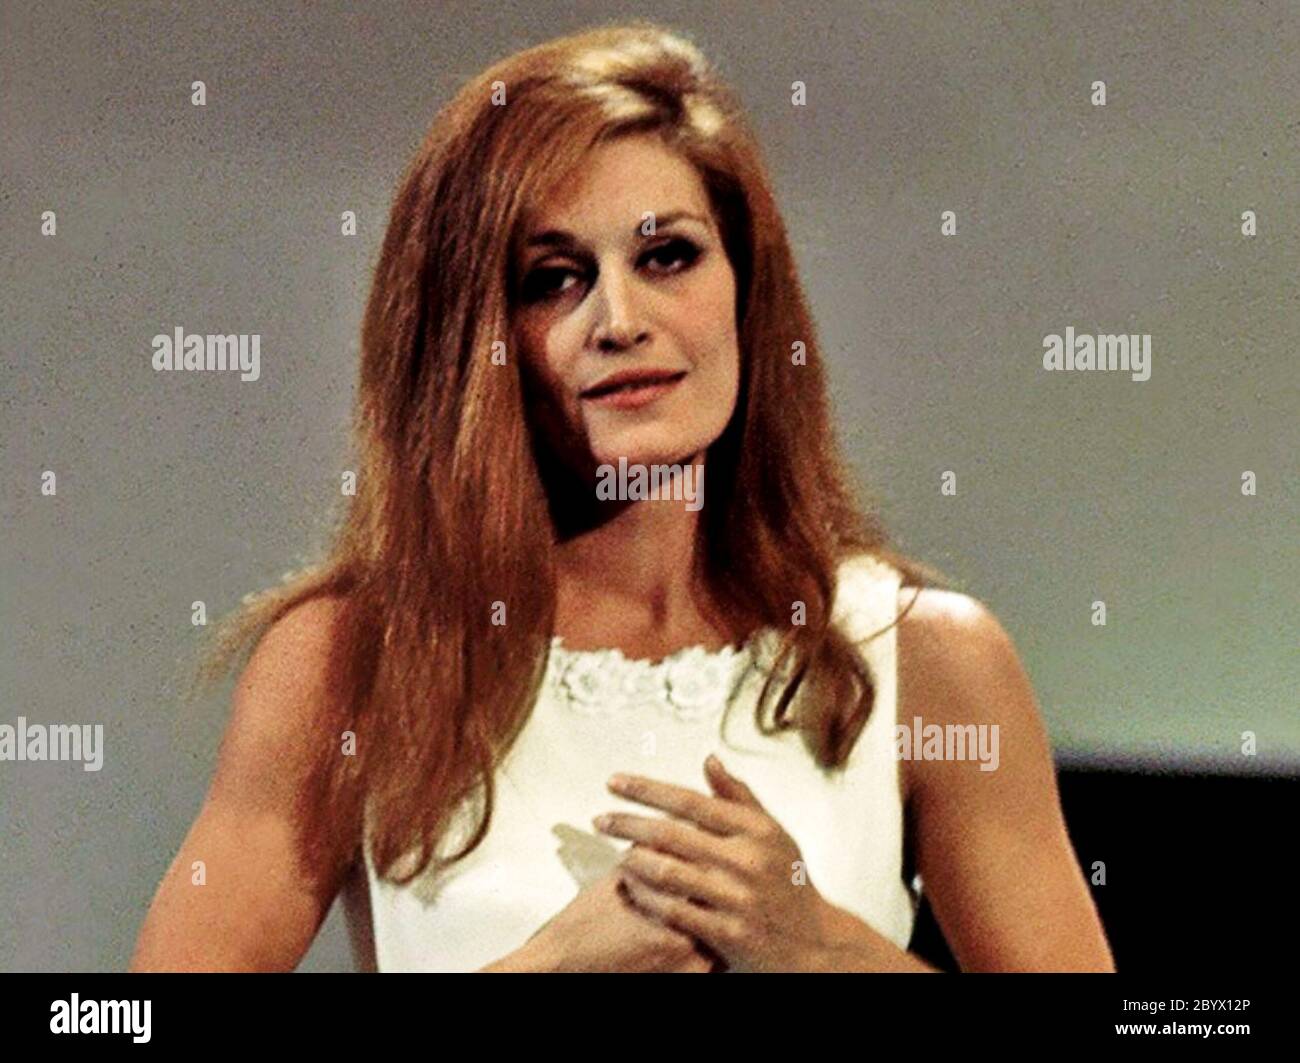 Dalida singing 'Dan dan dan' during popular Italian TV show 'Canzonissima' in 1967 Stock Photo